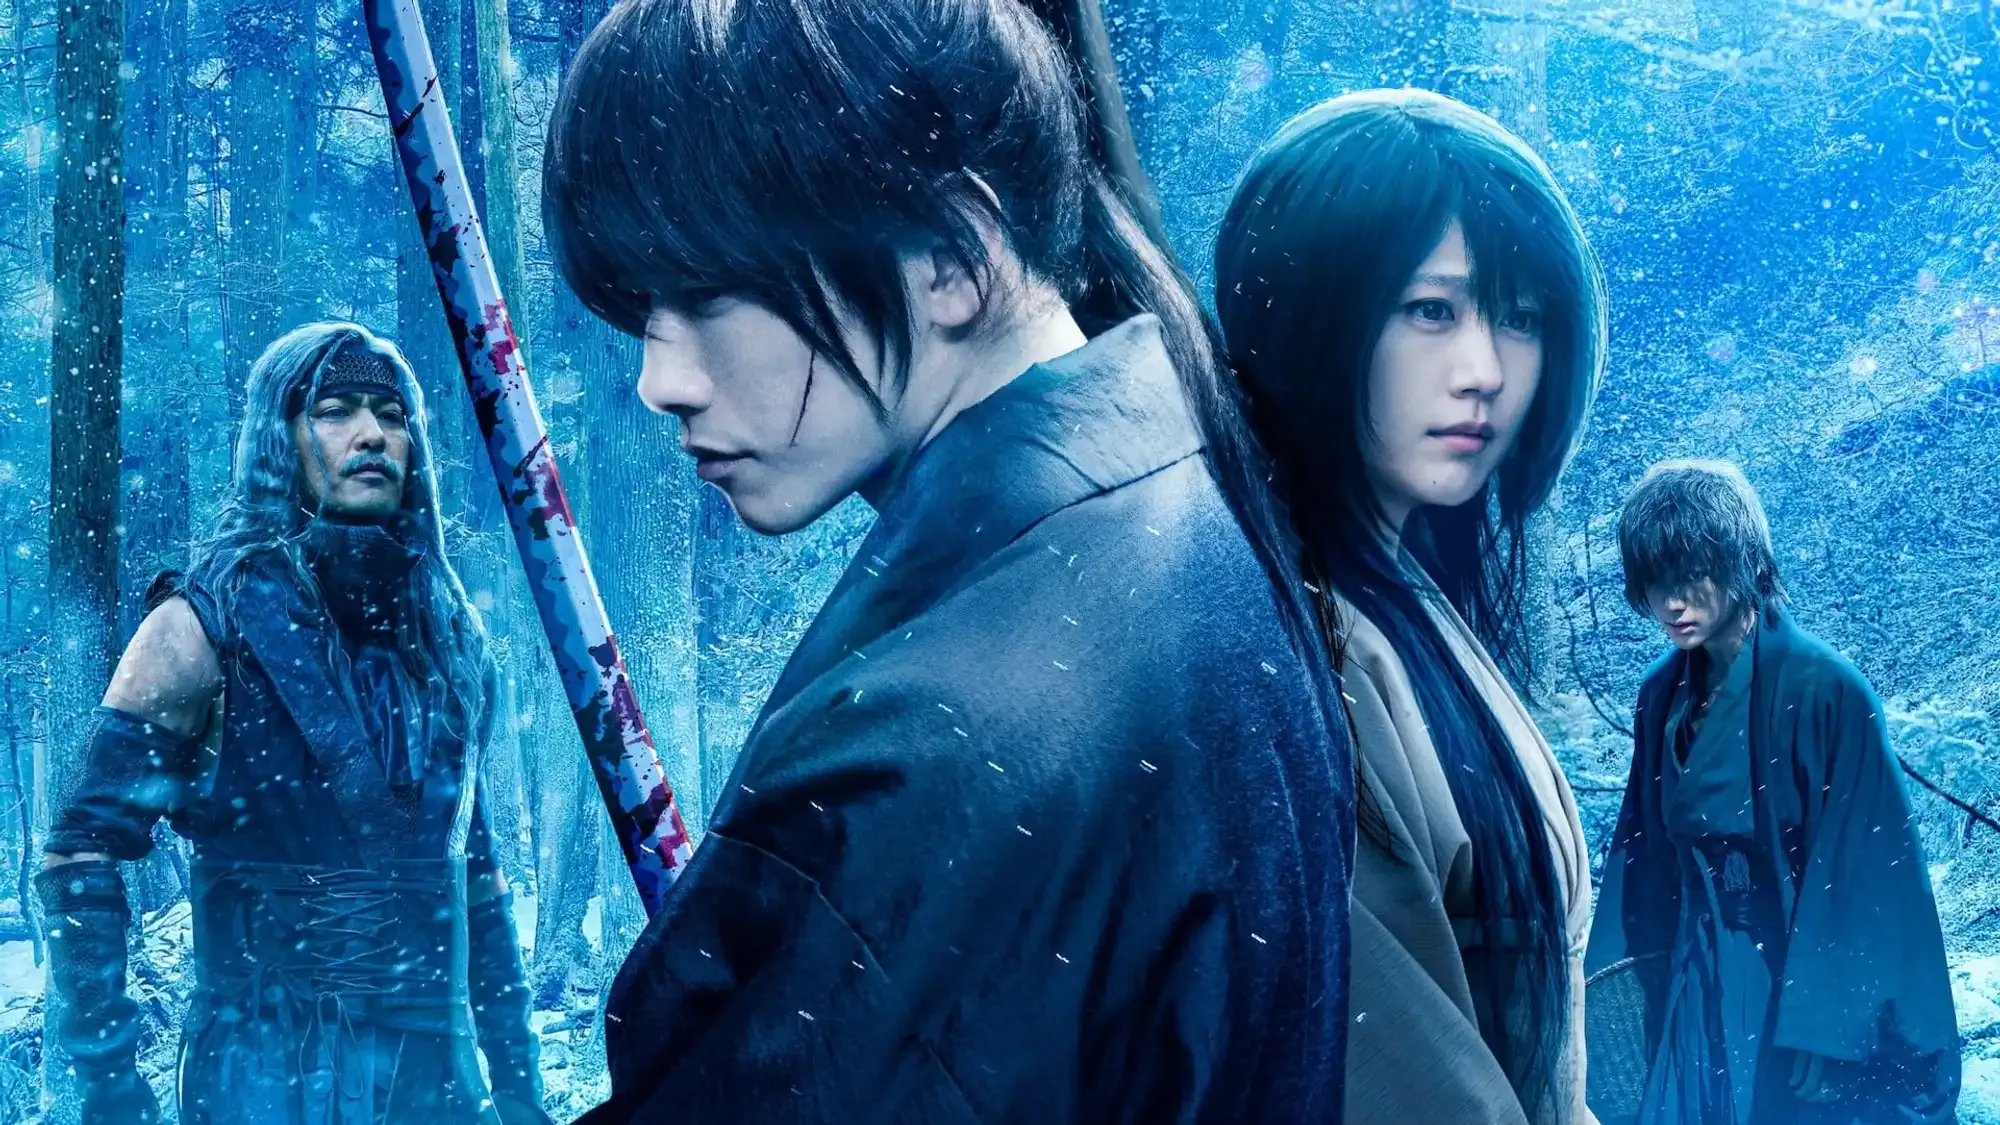 Rurouni Kenshin: The Beginning movie review